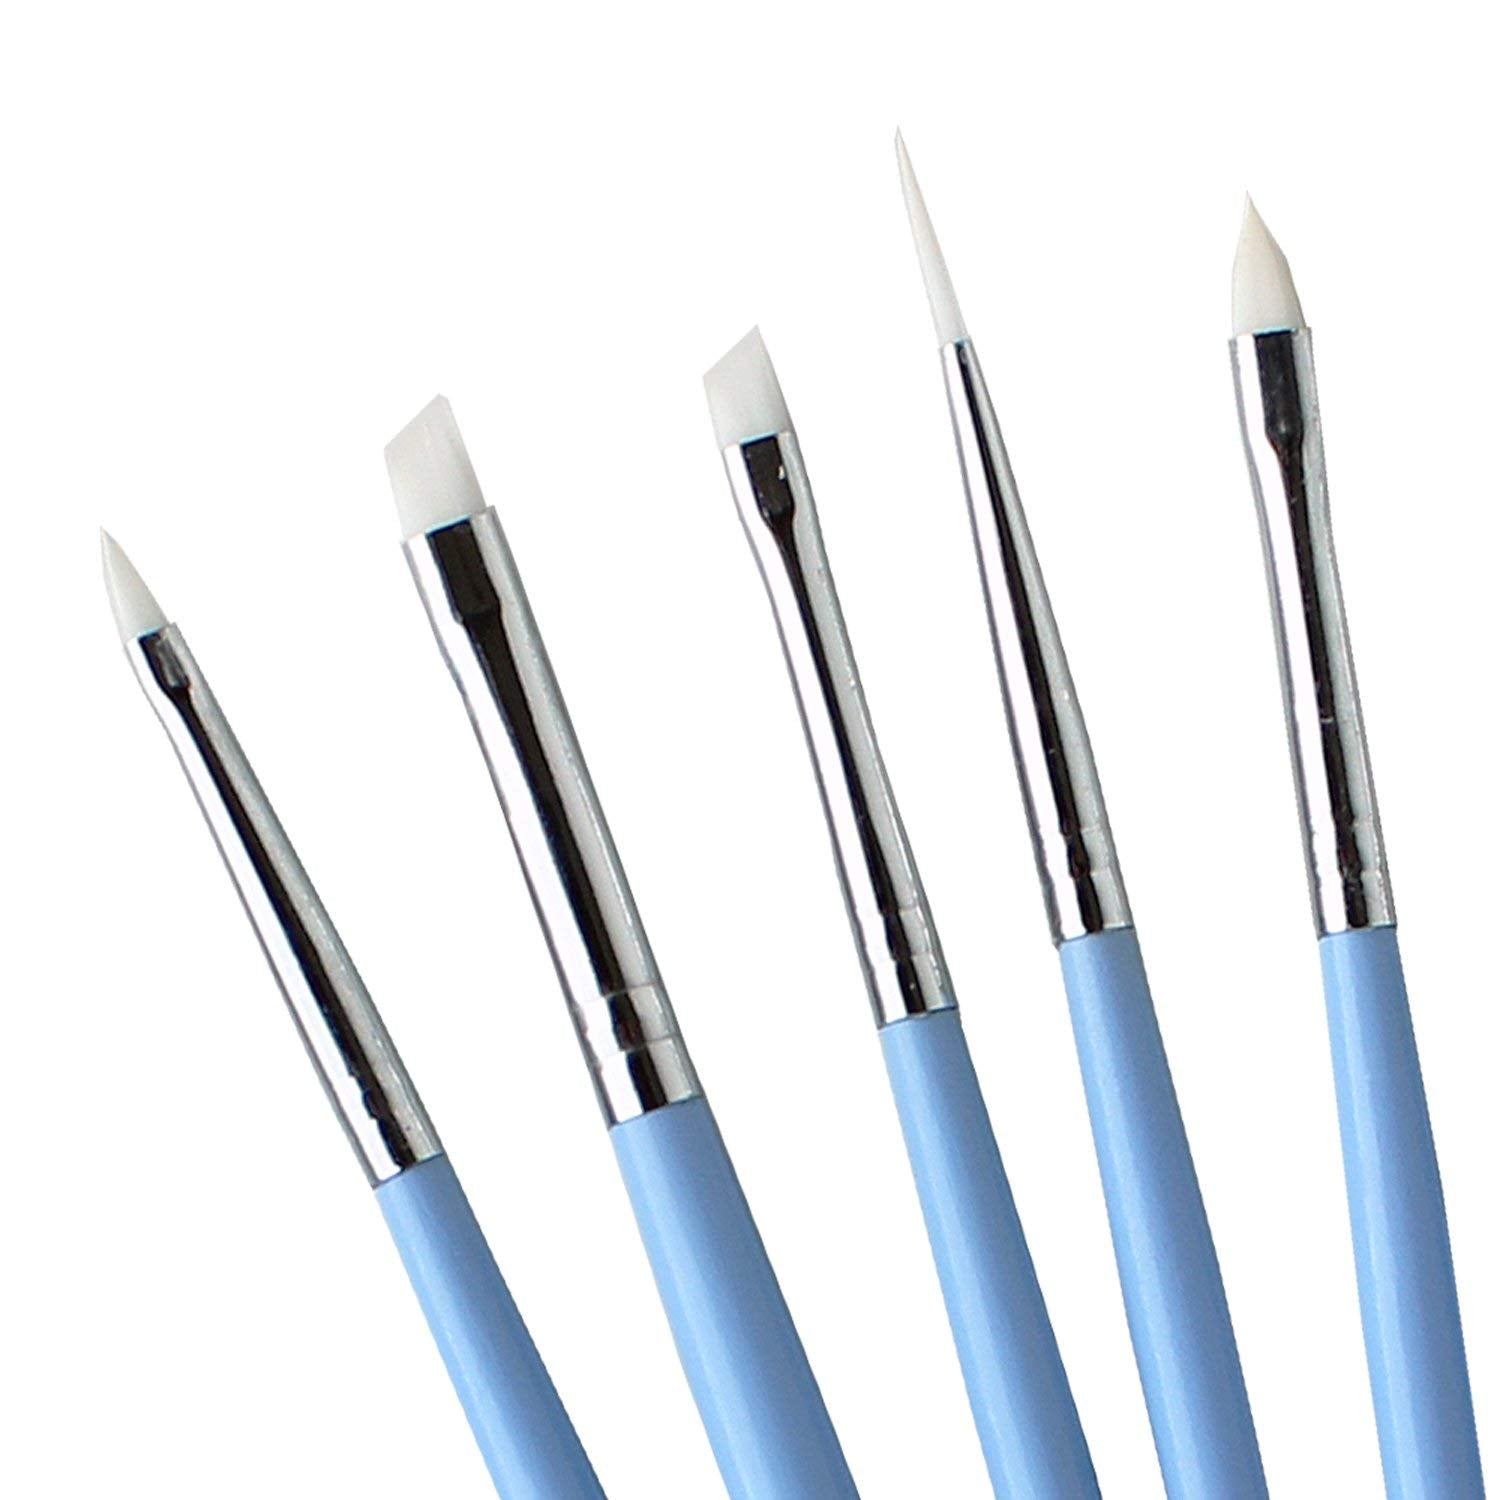 15 Pcs Nail Art Brushes Set | SOMETHING BLUE